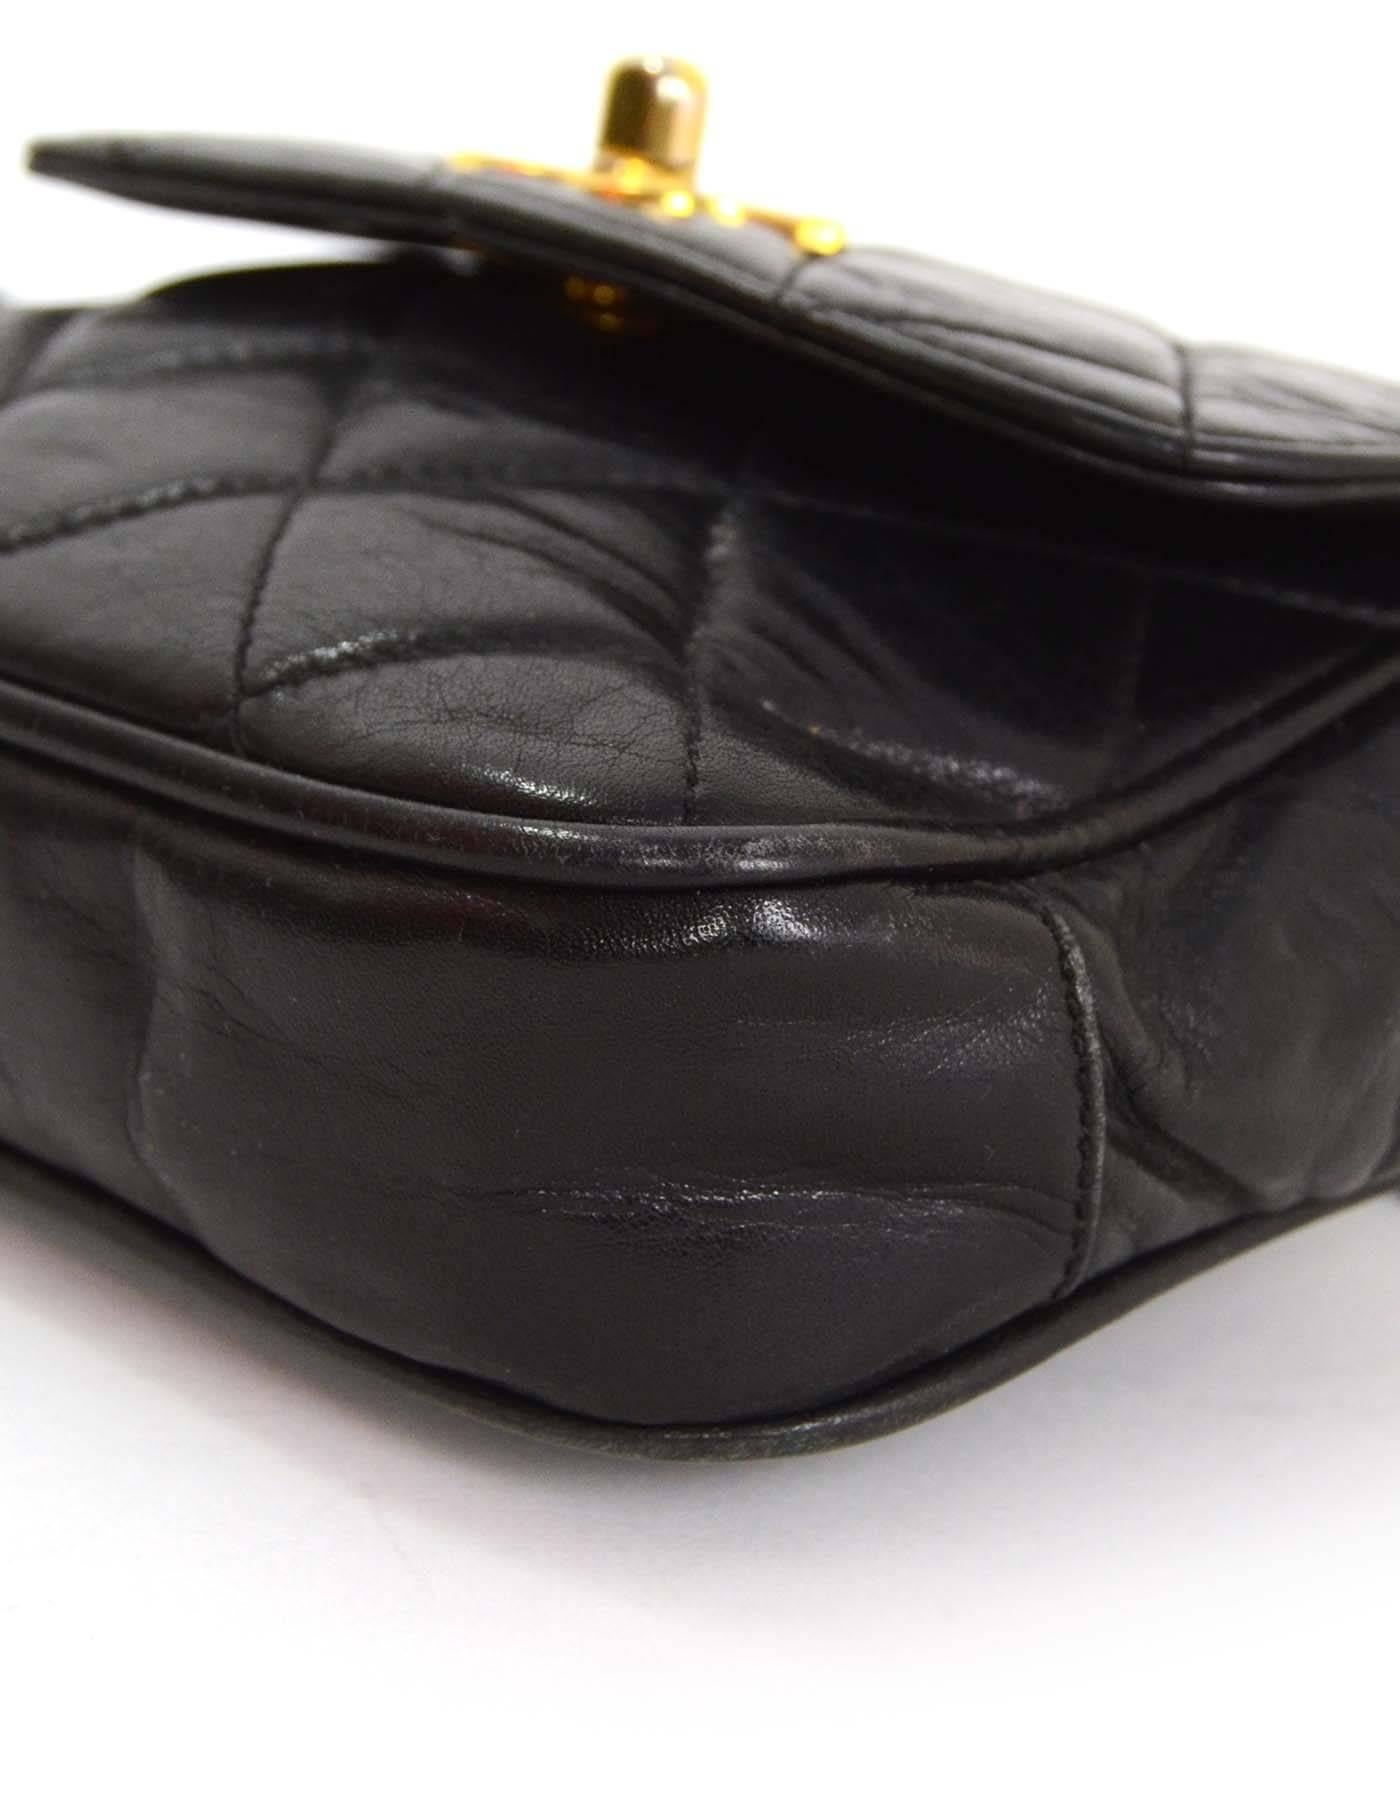 Chanel Black Quilted Flap Belt Bag sz 75 GHW 1